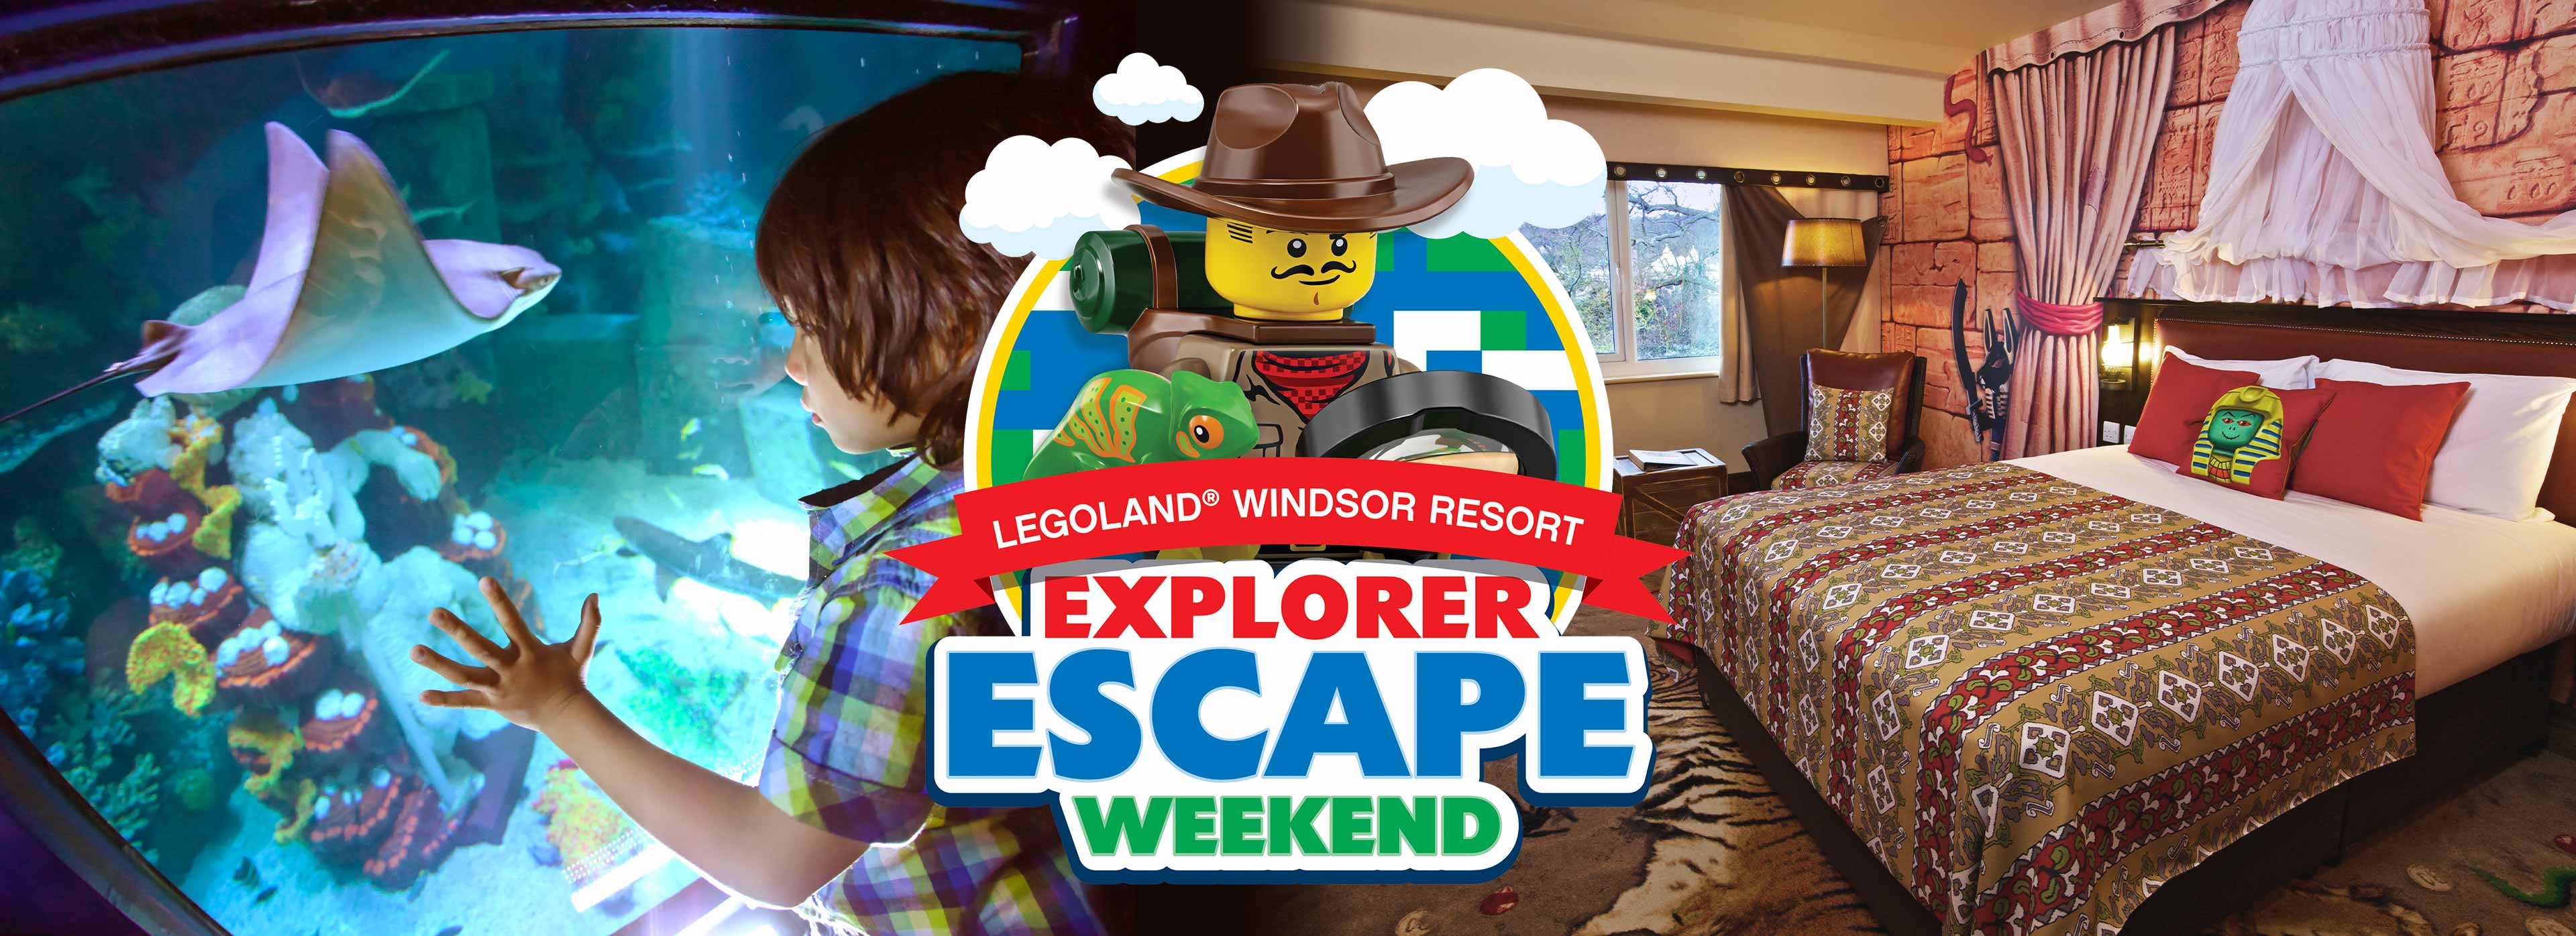 Explorer Escapes short breaks at LEGOLAND Windsor Resort